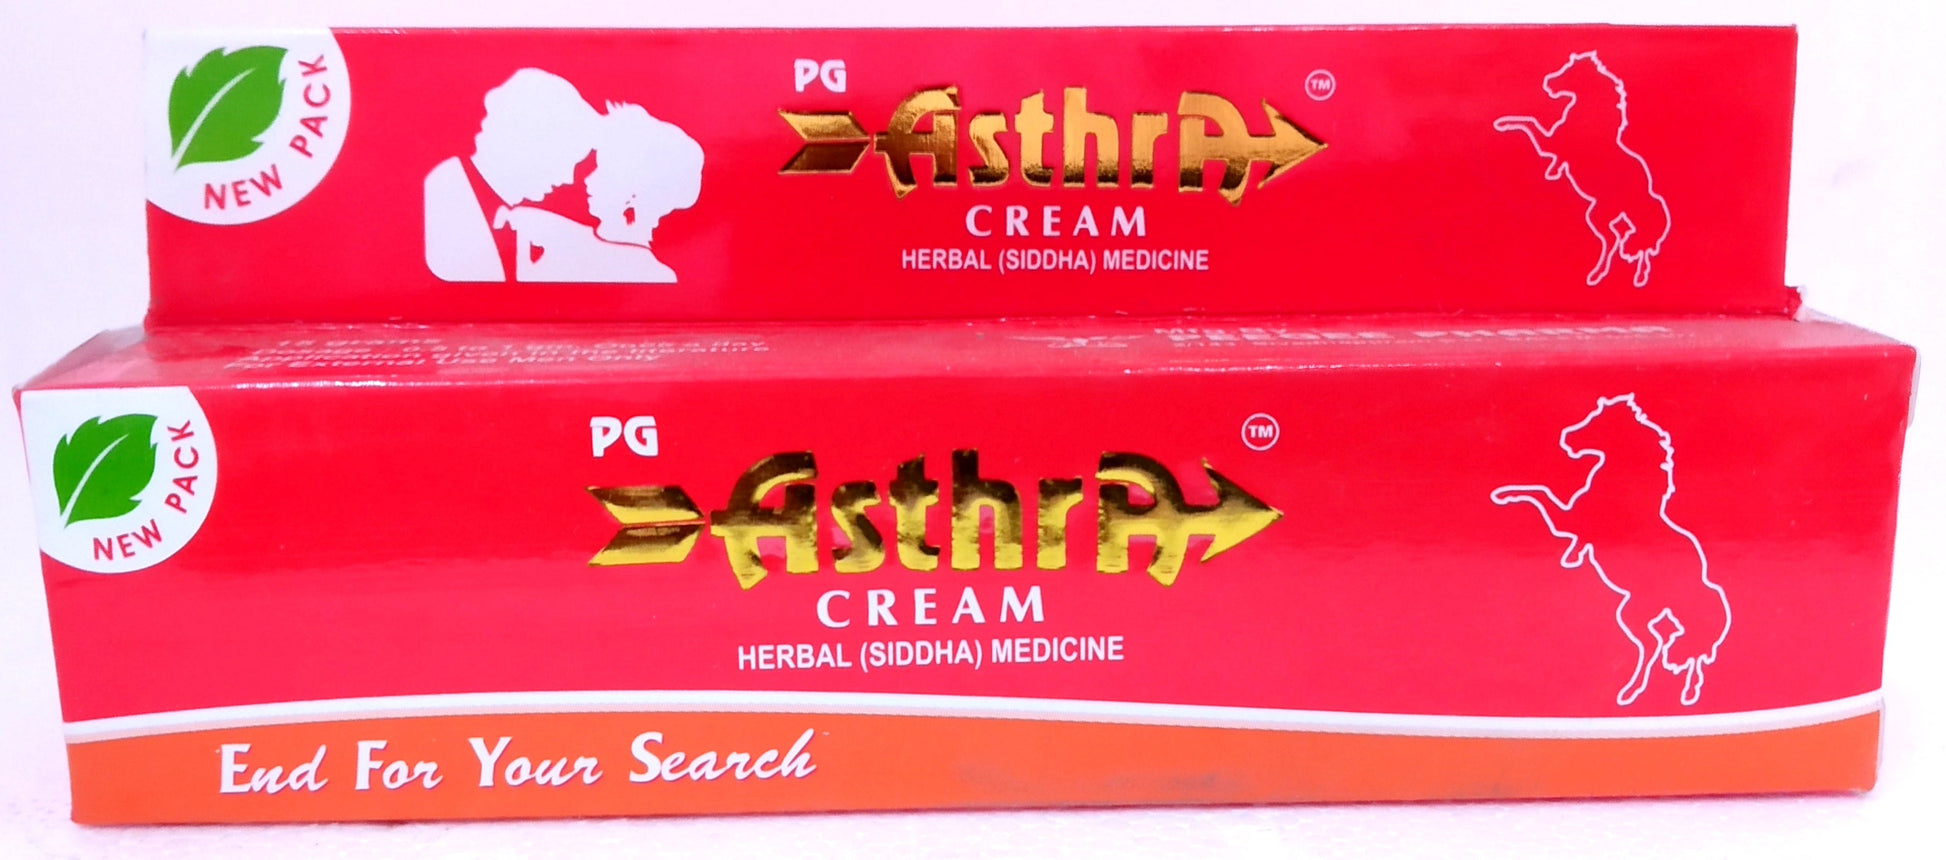 Asthra Cream 15gm -  Peegee - Medizzo.com